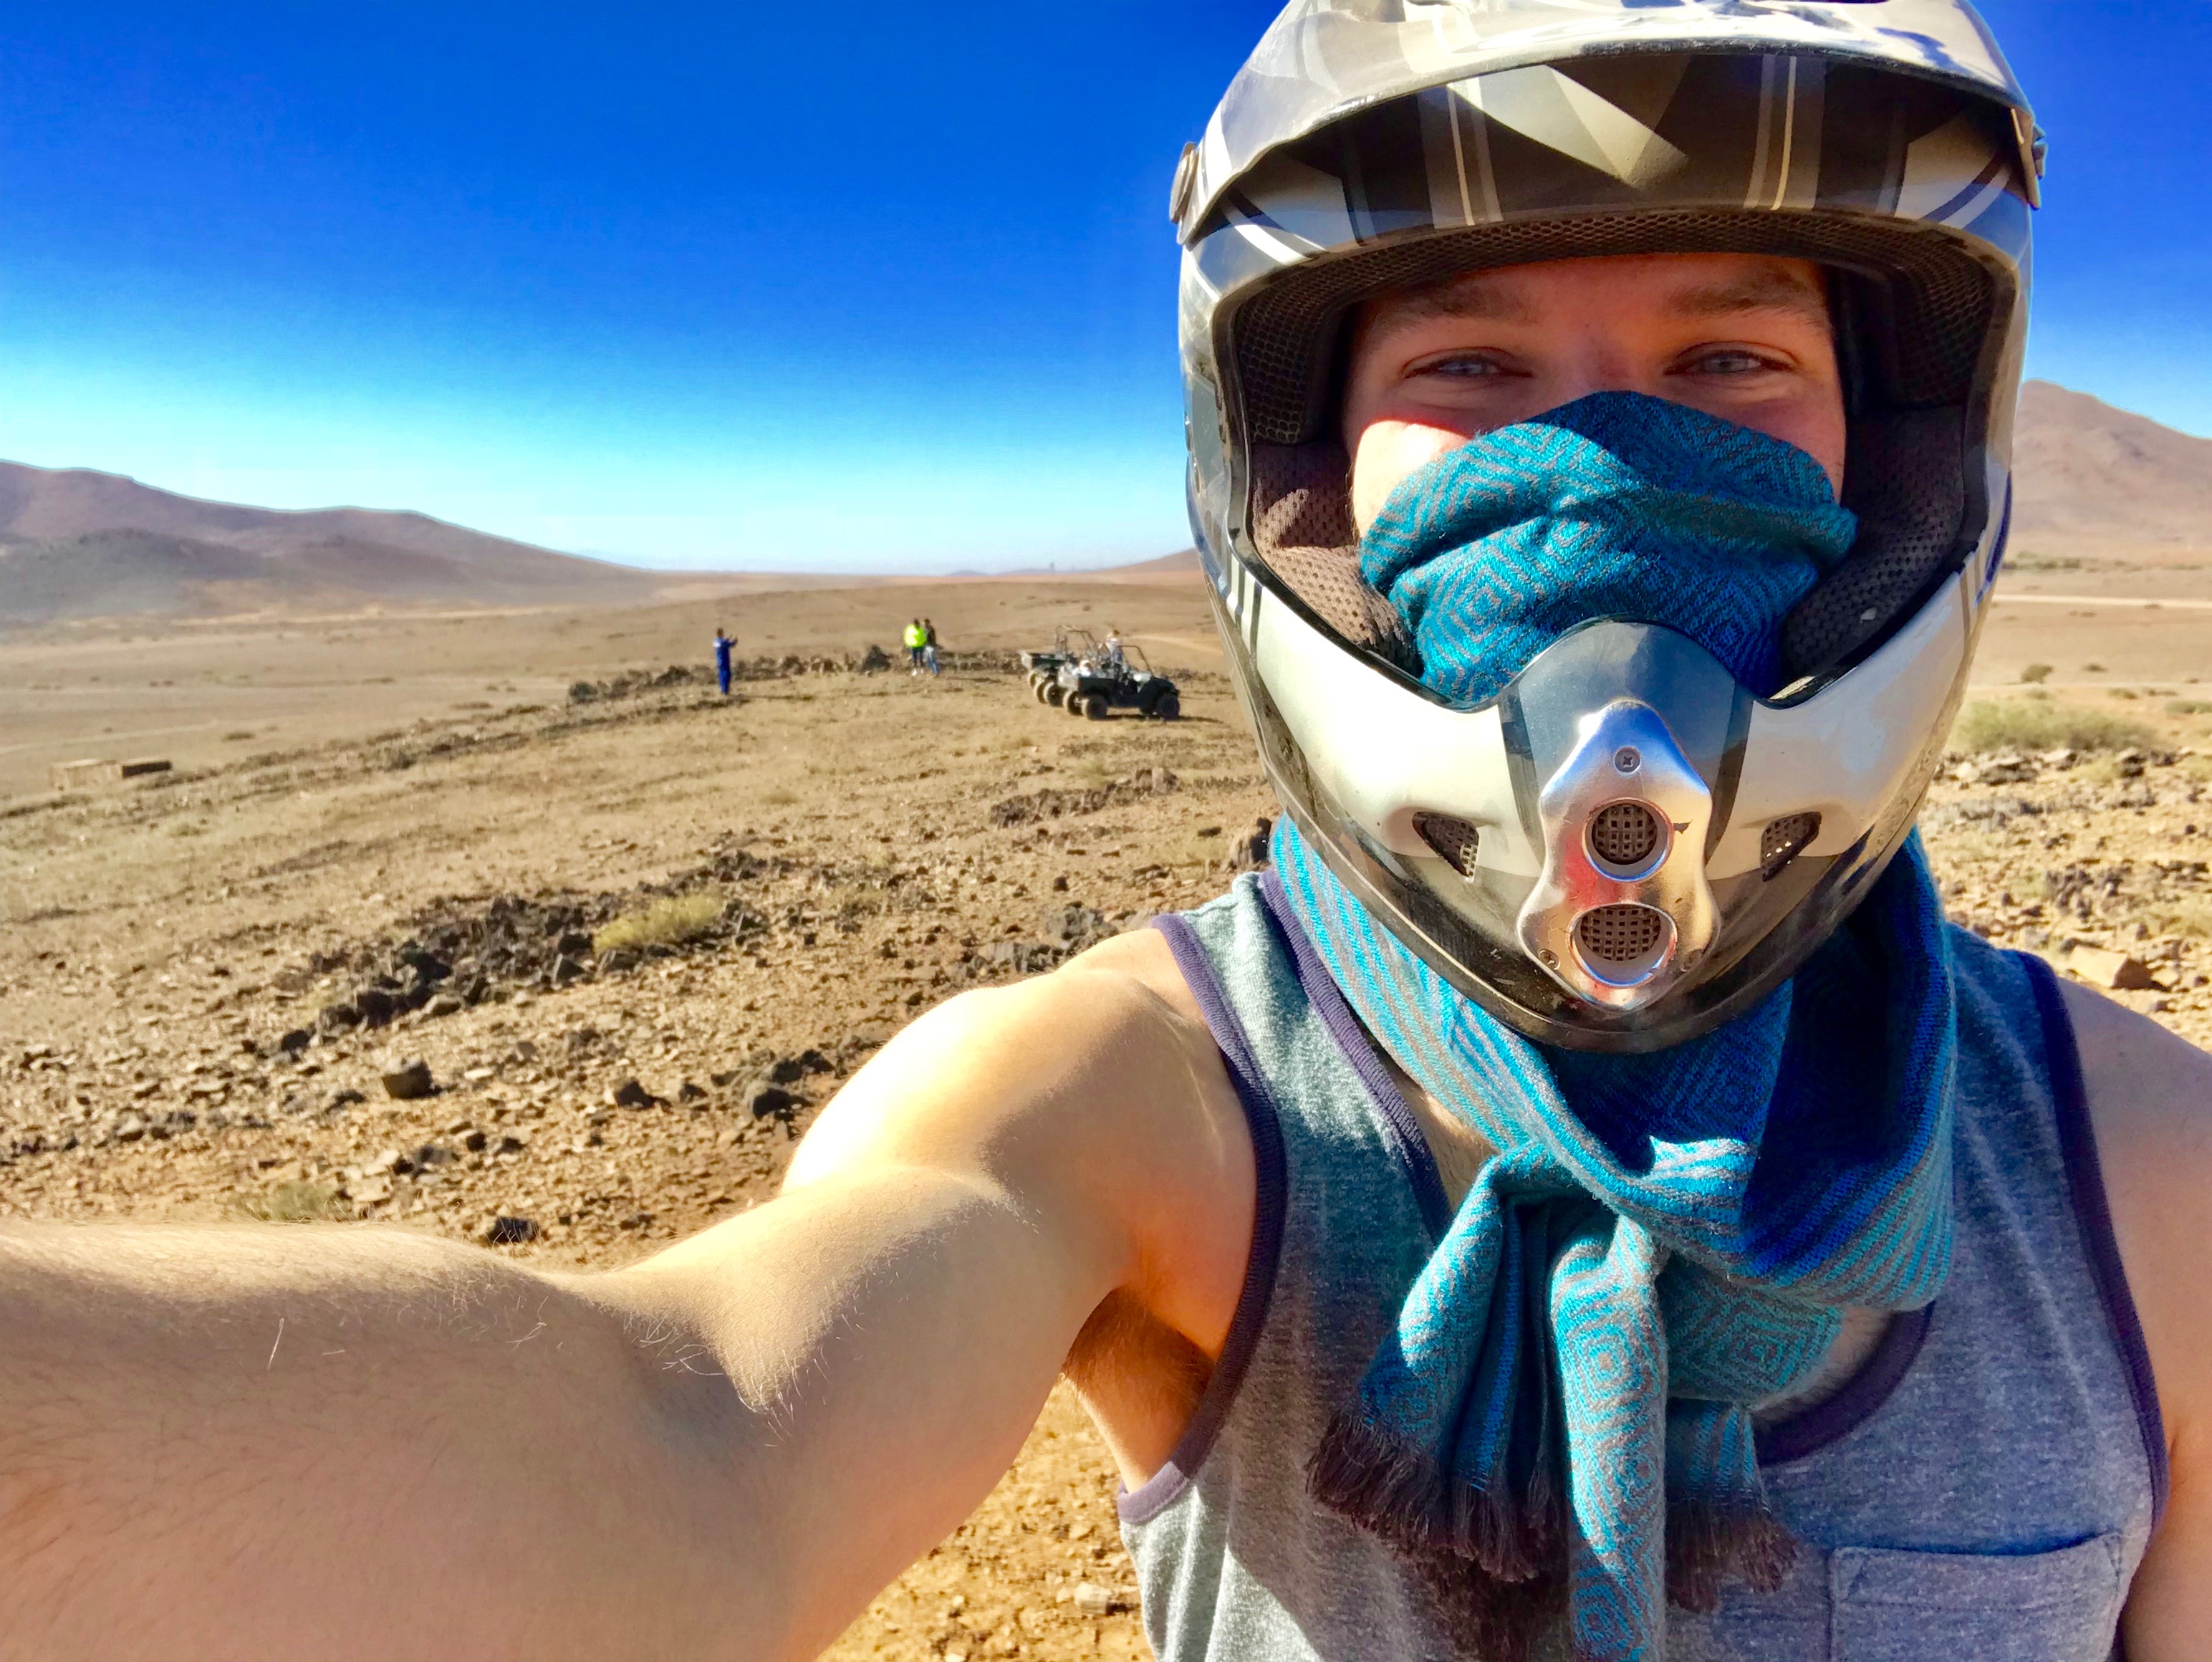 Student in desert wearing helmet